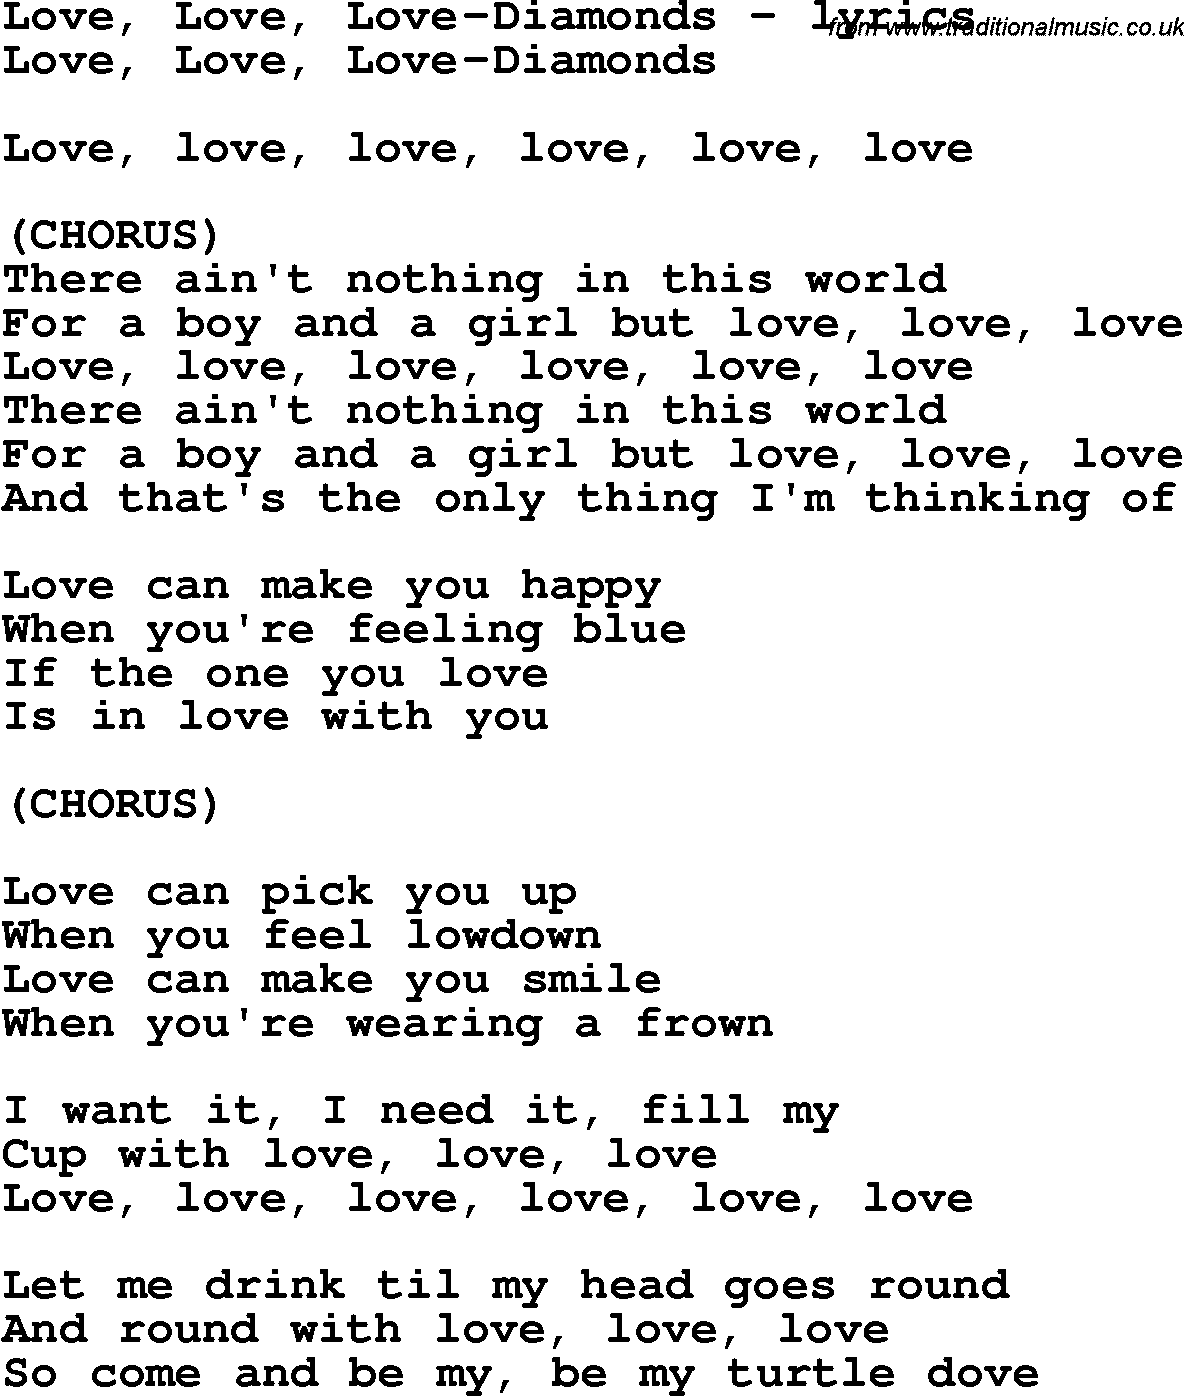 Love Song Lyrics for: Love, Love, Love-Diamonds